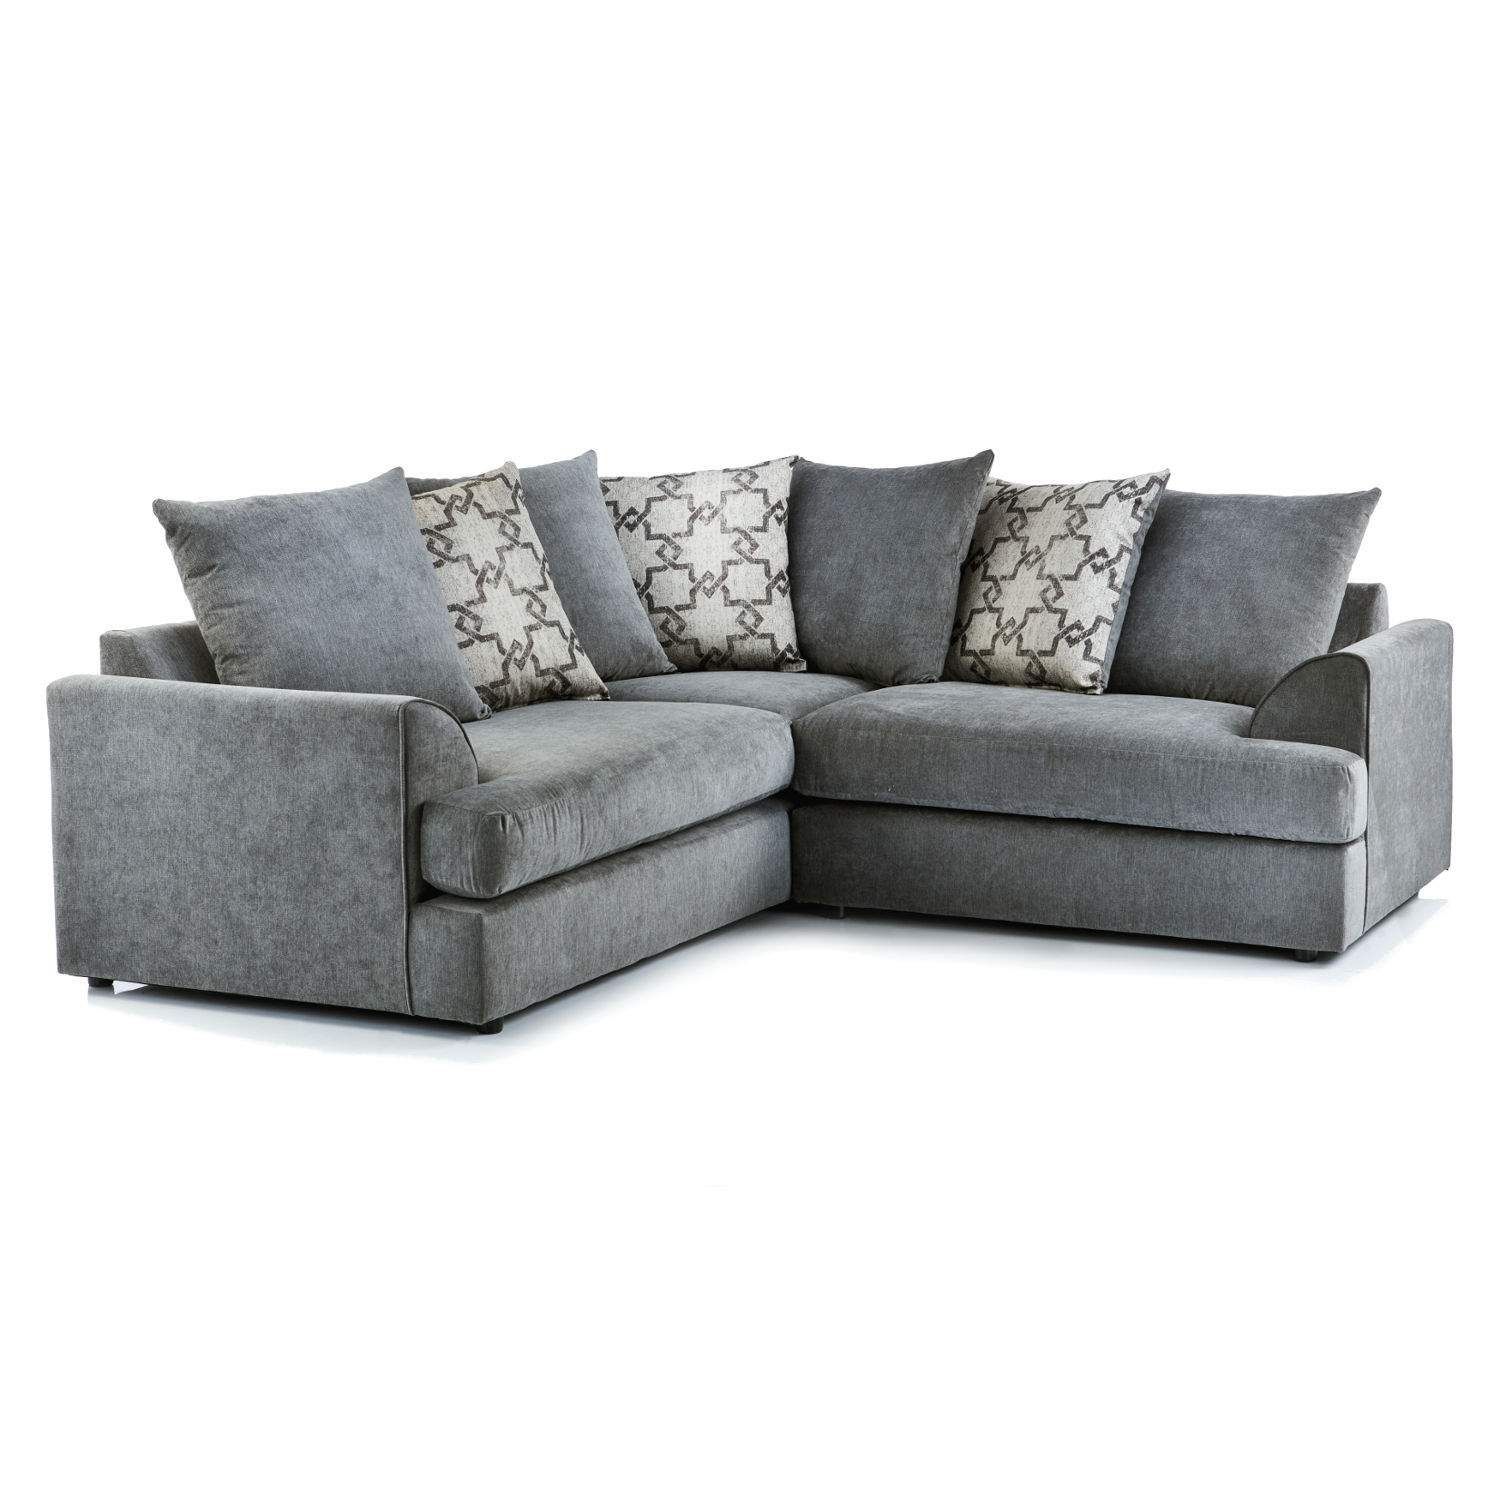 Washington Fabric Corner Sofa In Charcoal | Just Sit On It Inside Fabric Corner Sofas (View 4 of 10)